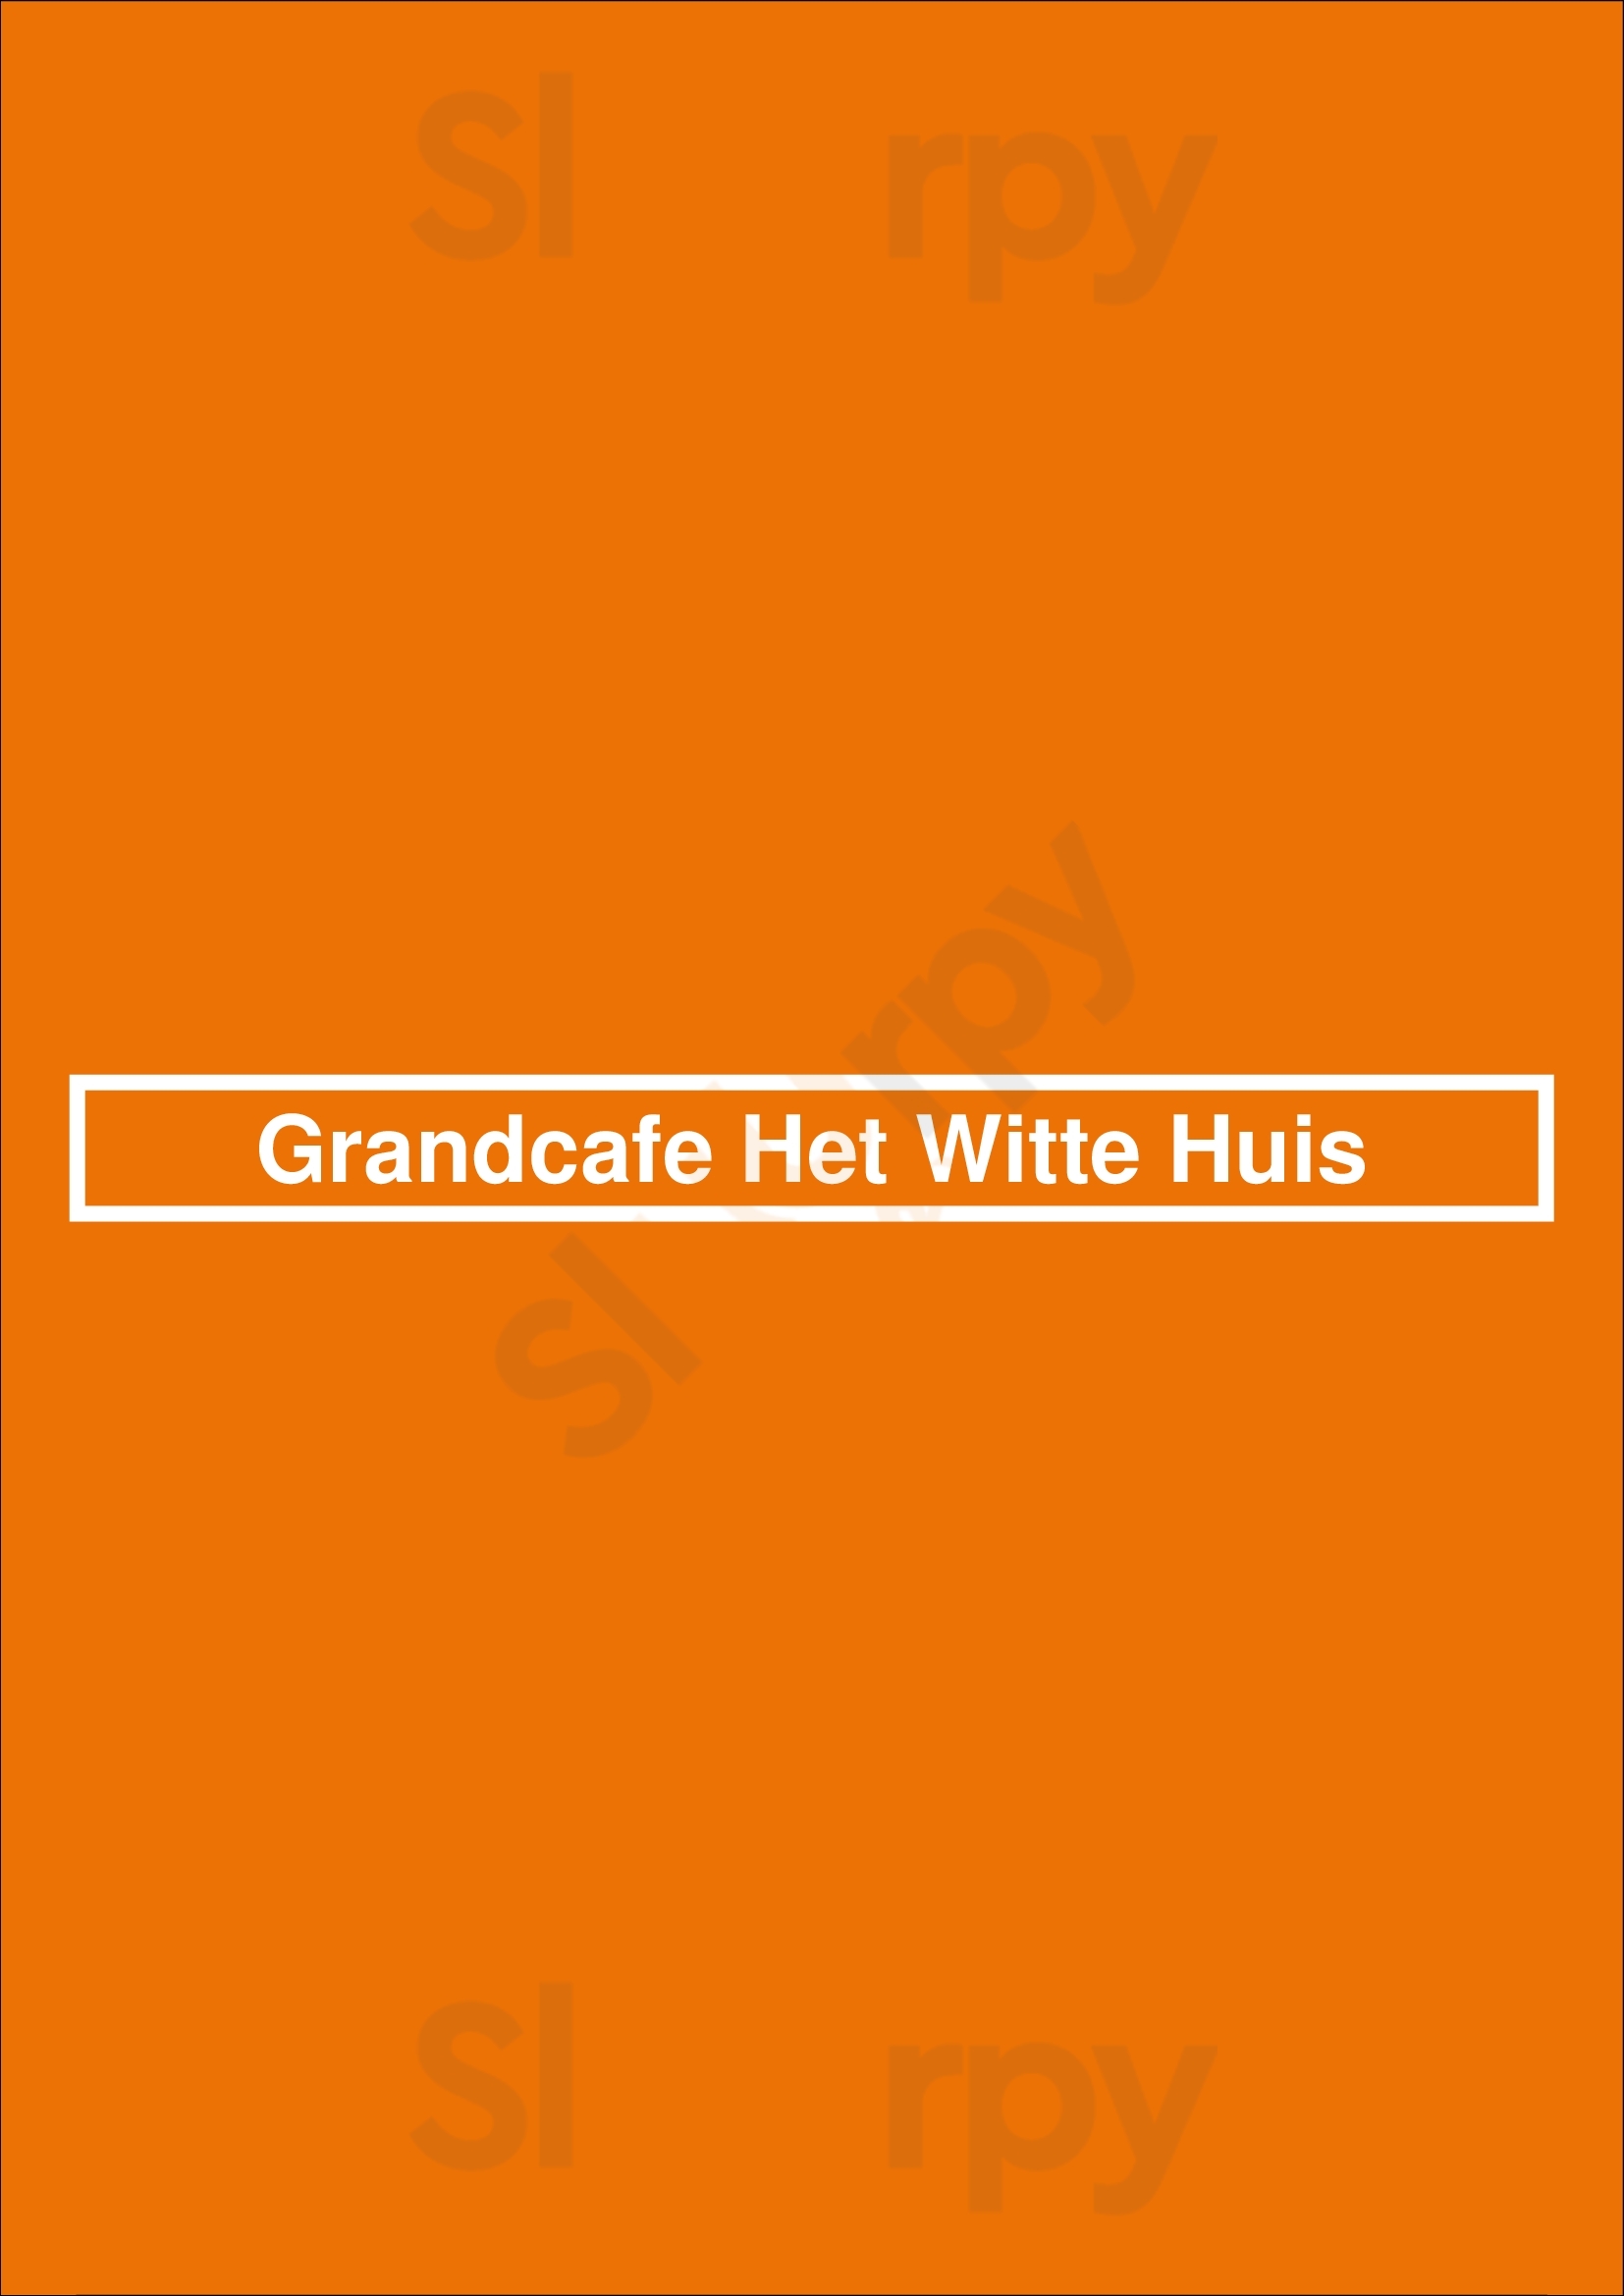 Grandcafe Het Witte Huis Rotterdam Menu - 1